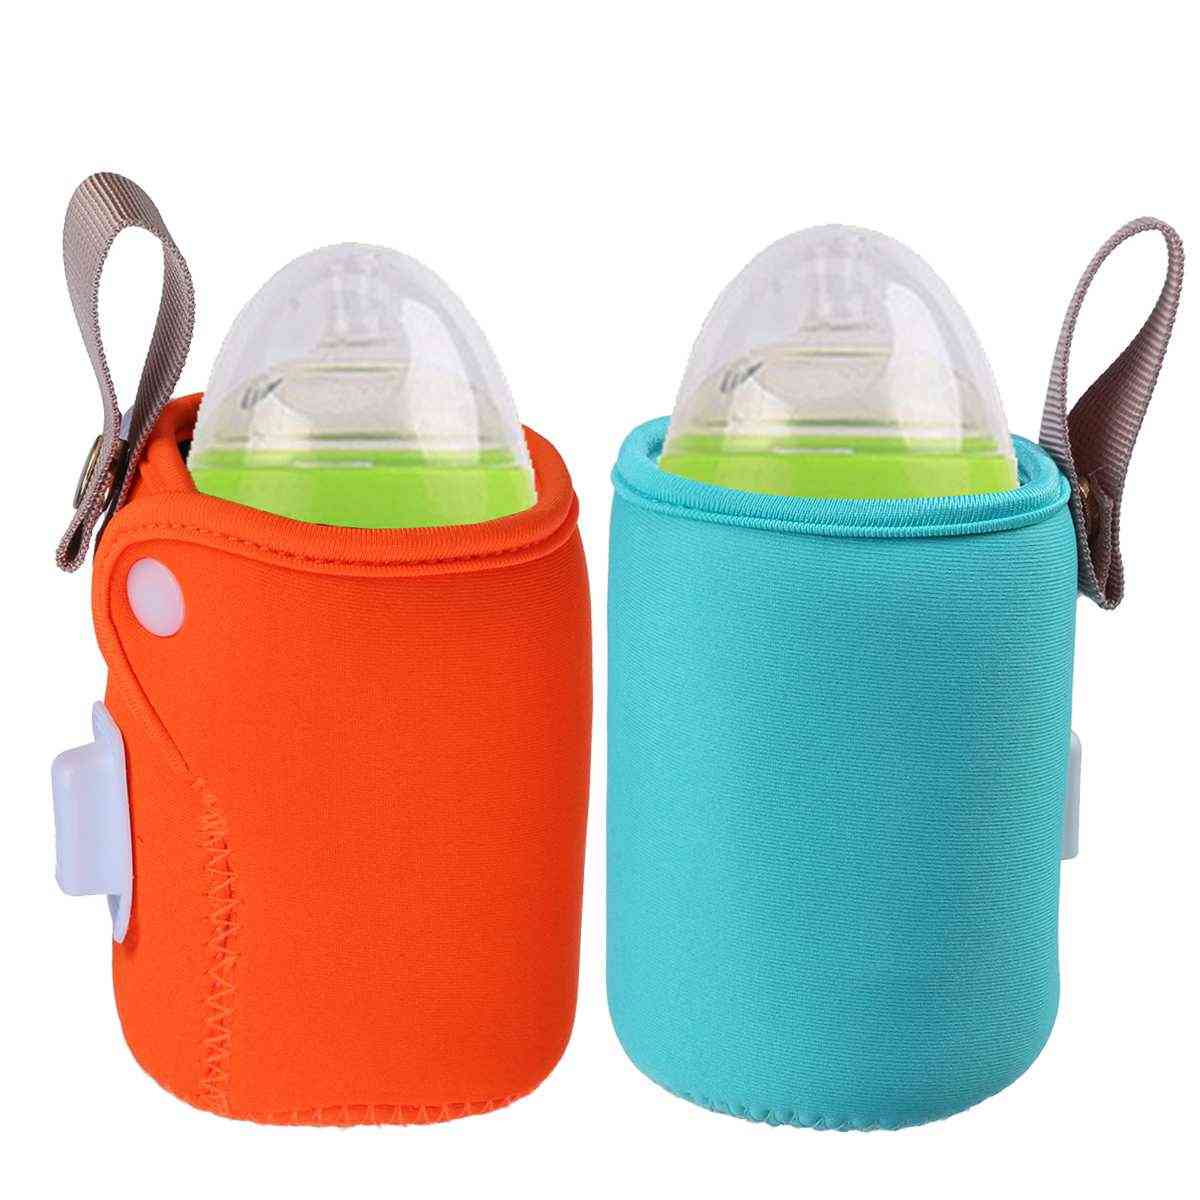 Usb Milk Warmer, Portable Travel Cup, Nursing Bottle Cover, Warmer Heater Bag